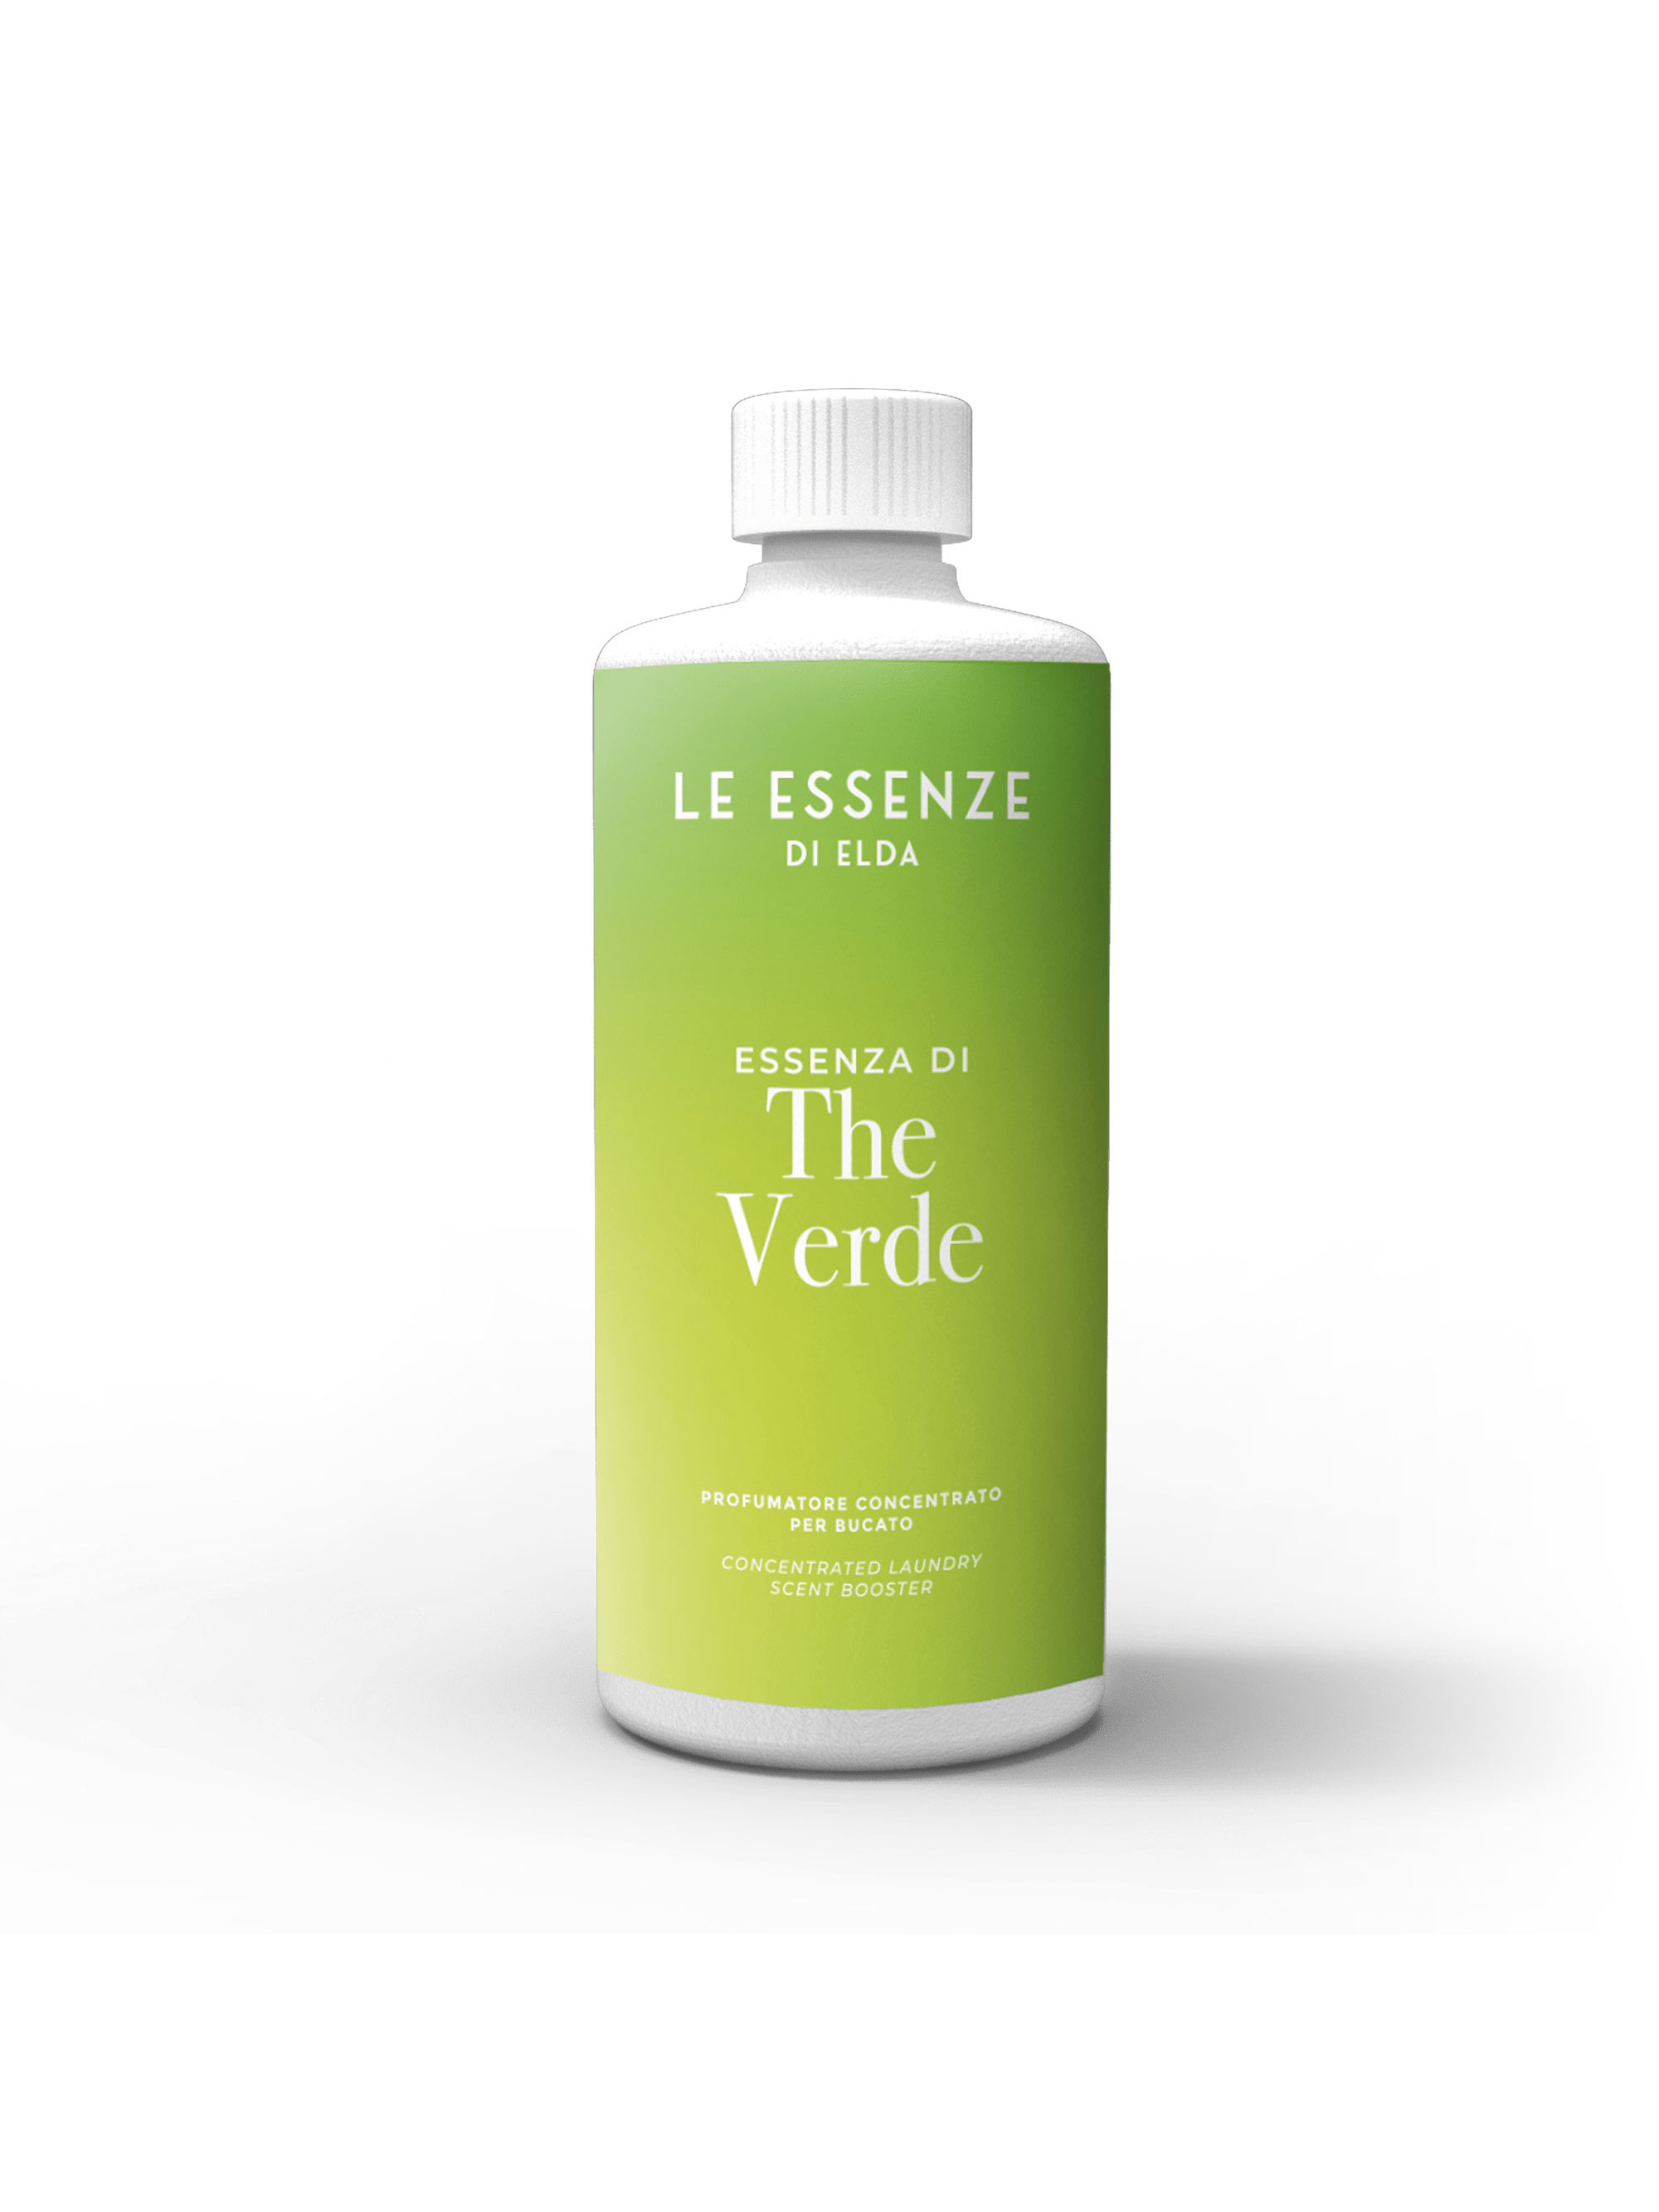 Essenza The Verde - 500 ml laundry perfumer